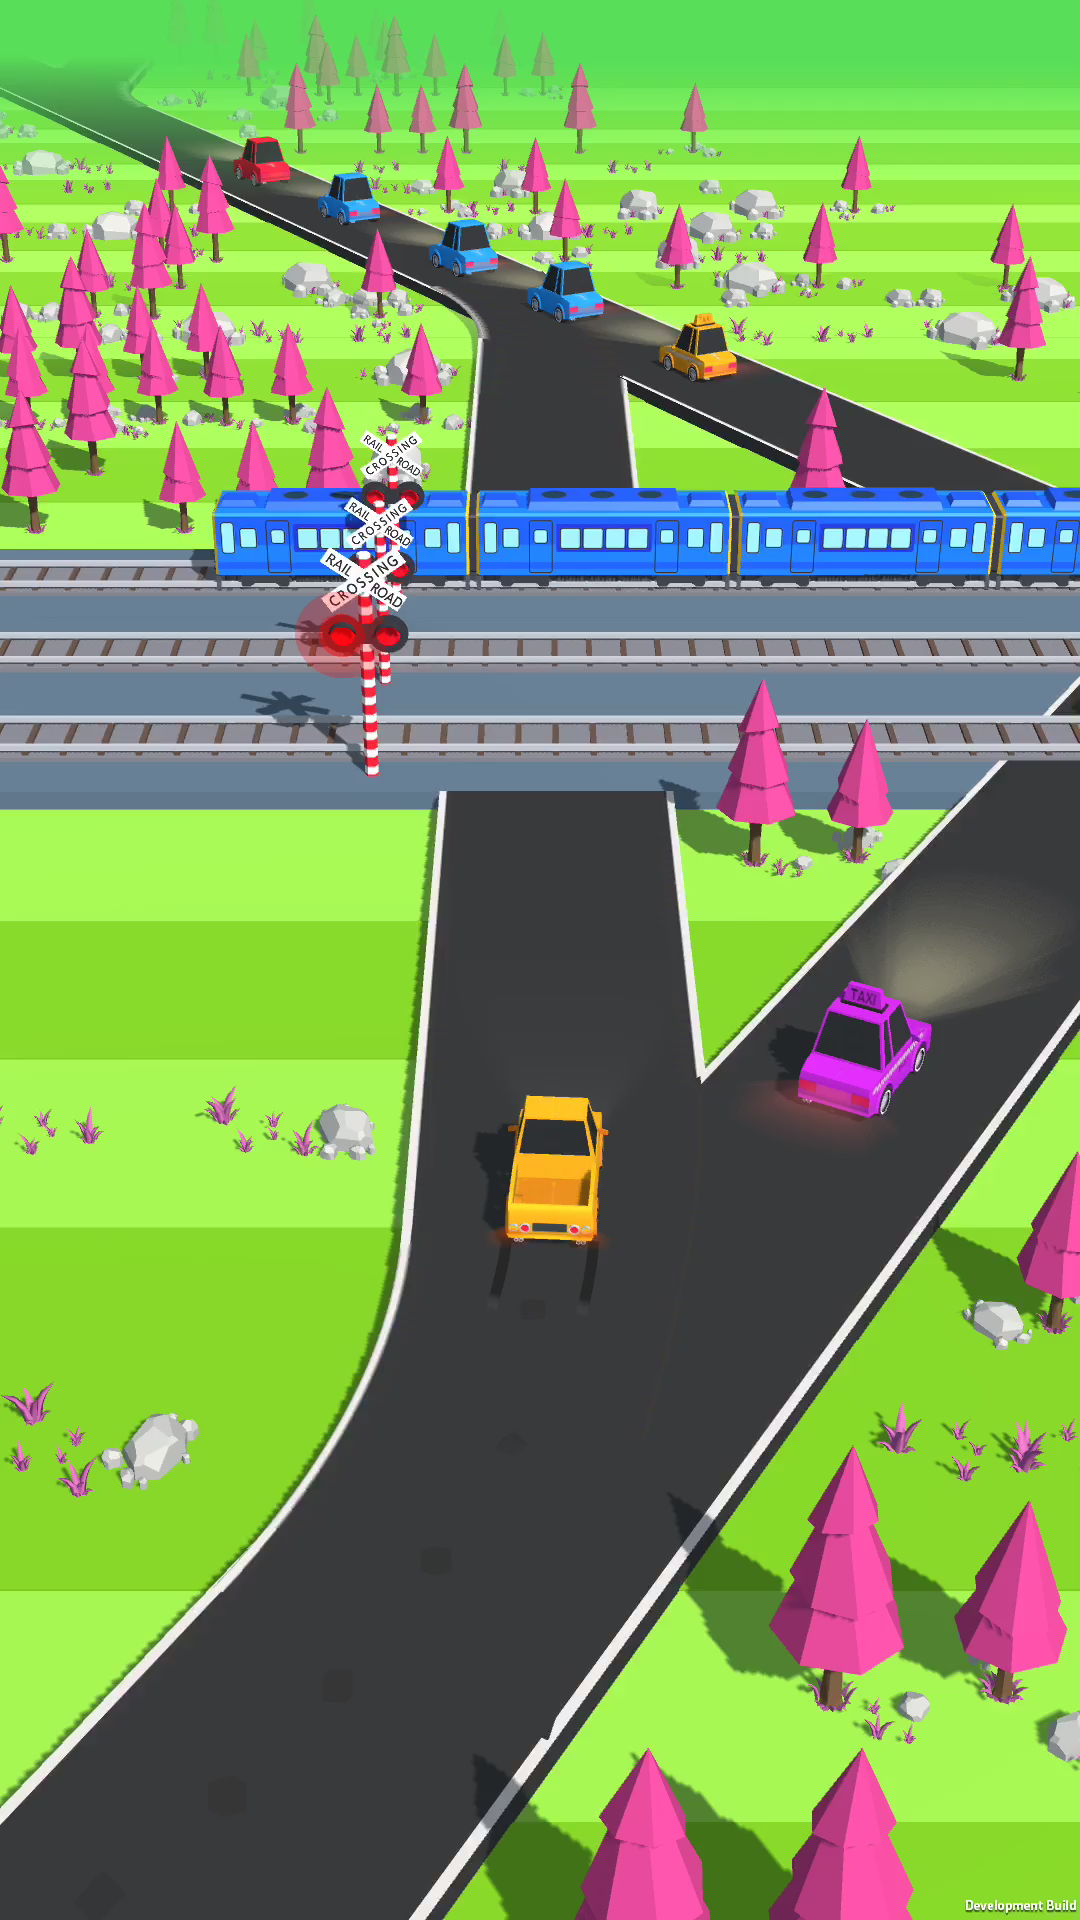 Play Traffic Run!: Driving Game Online